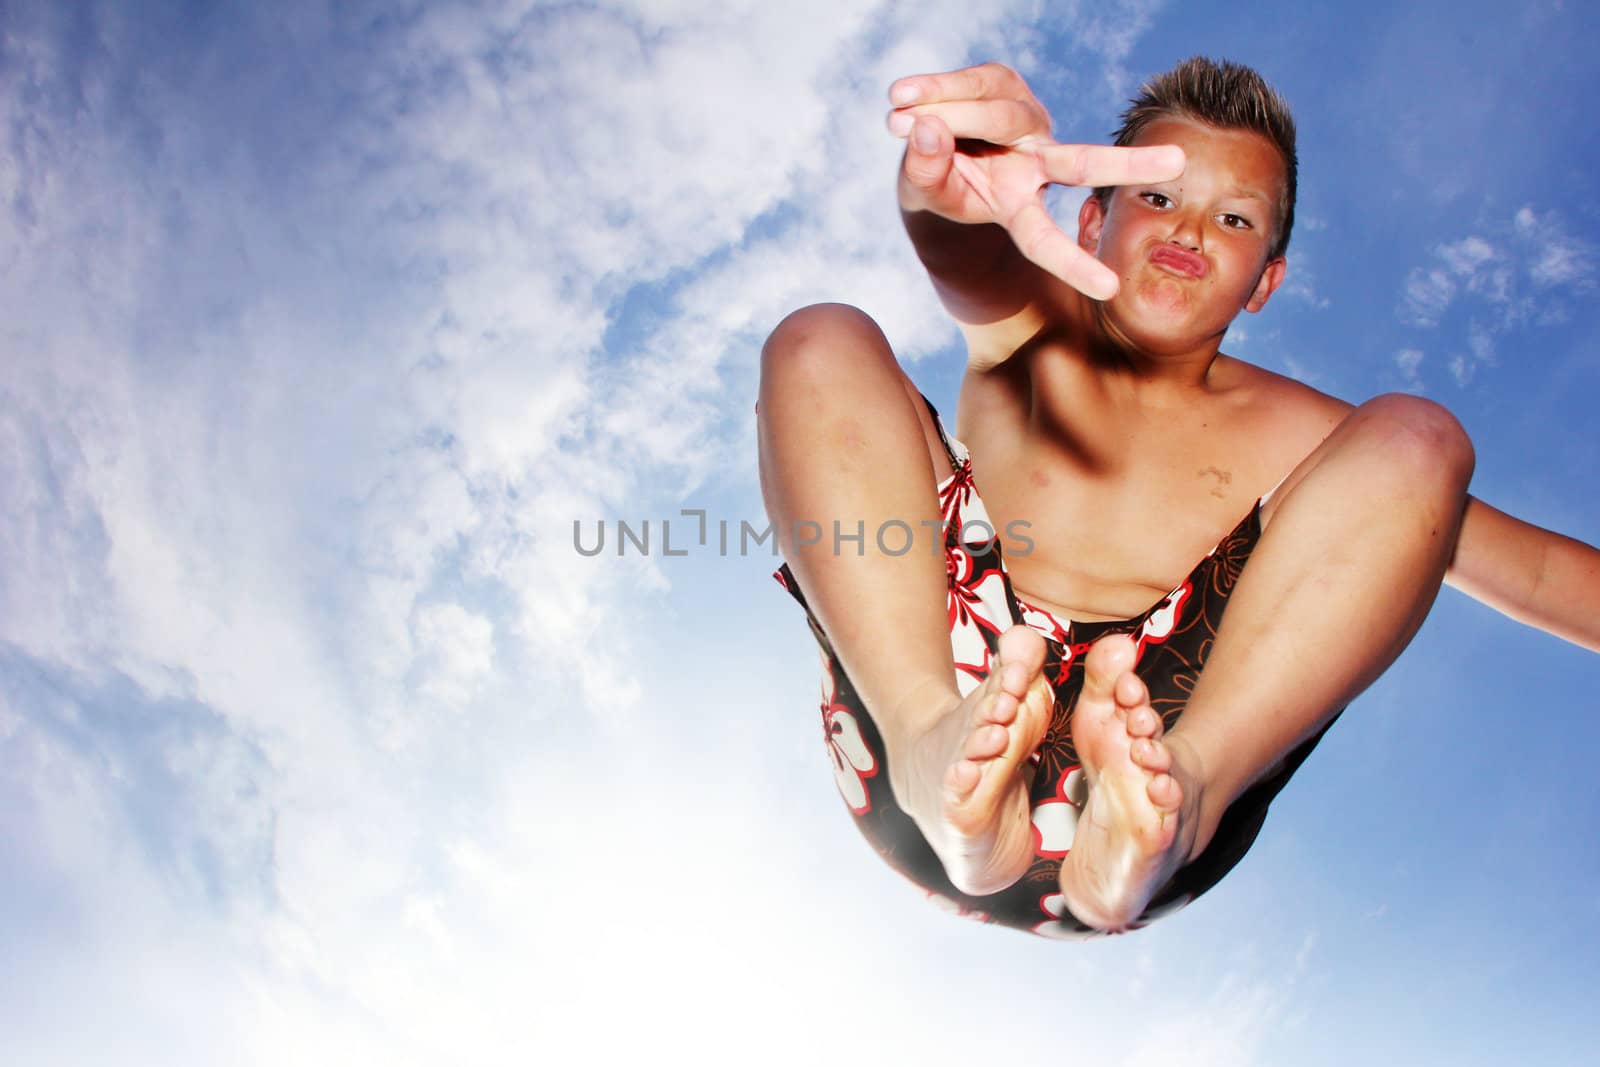 Jumping boy by Hasenonkel